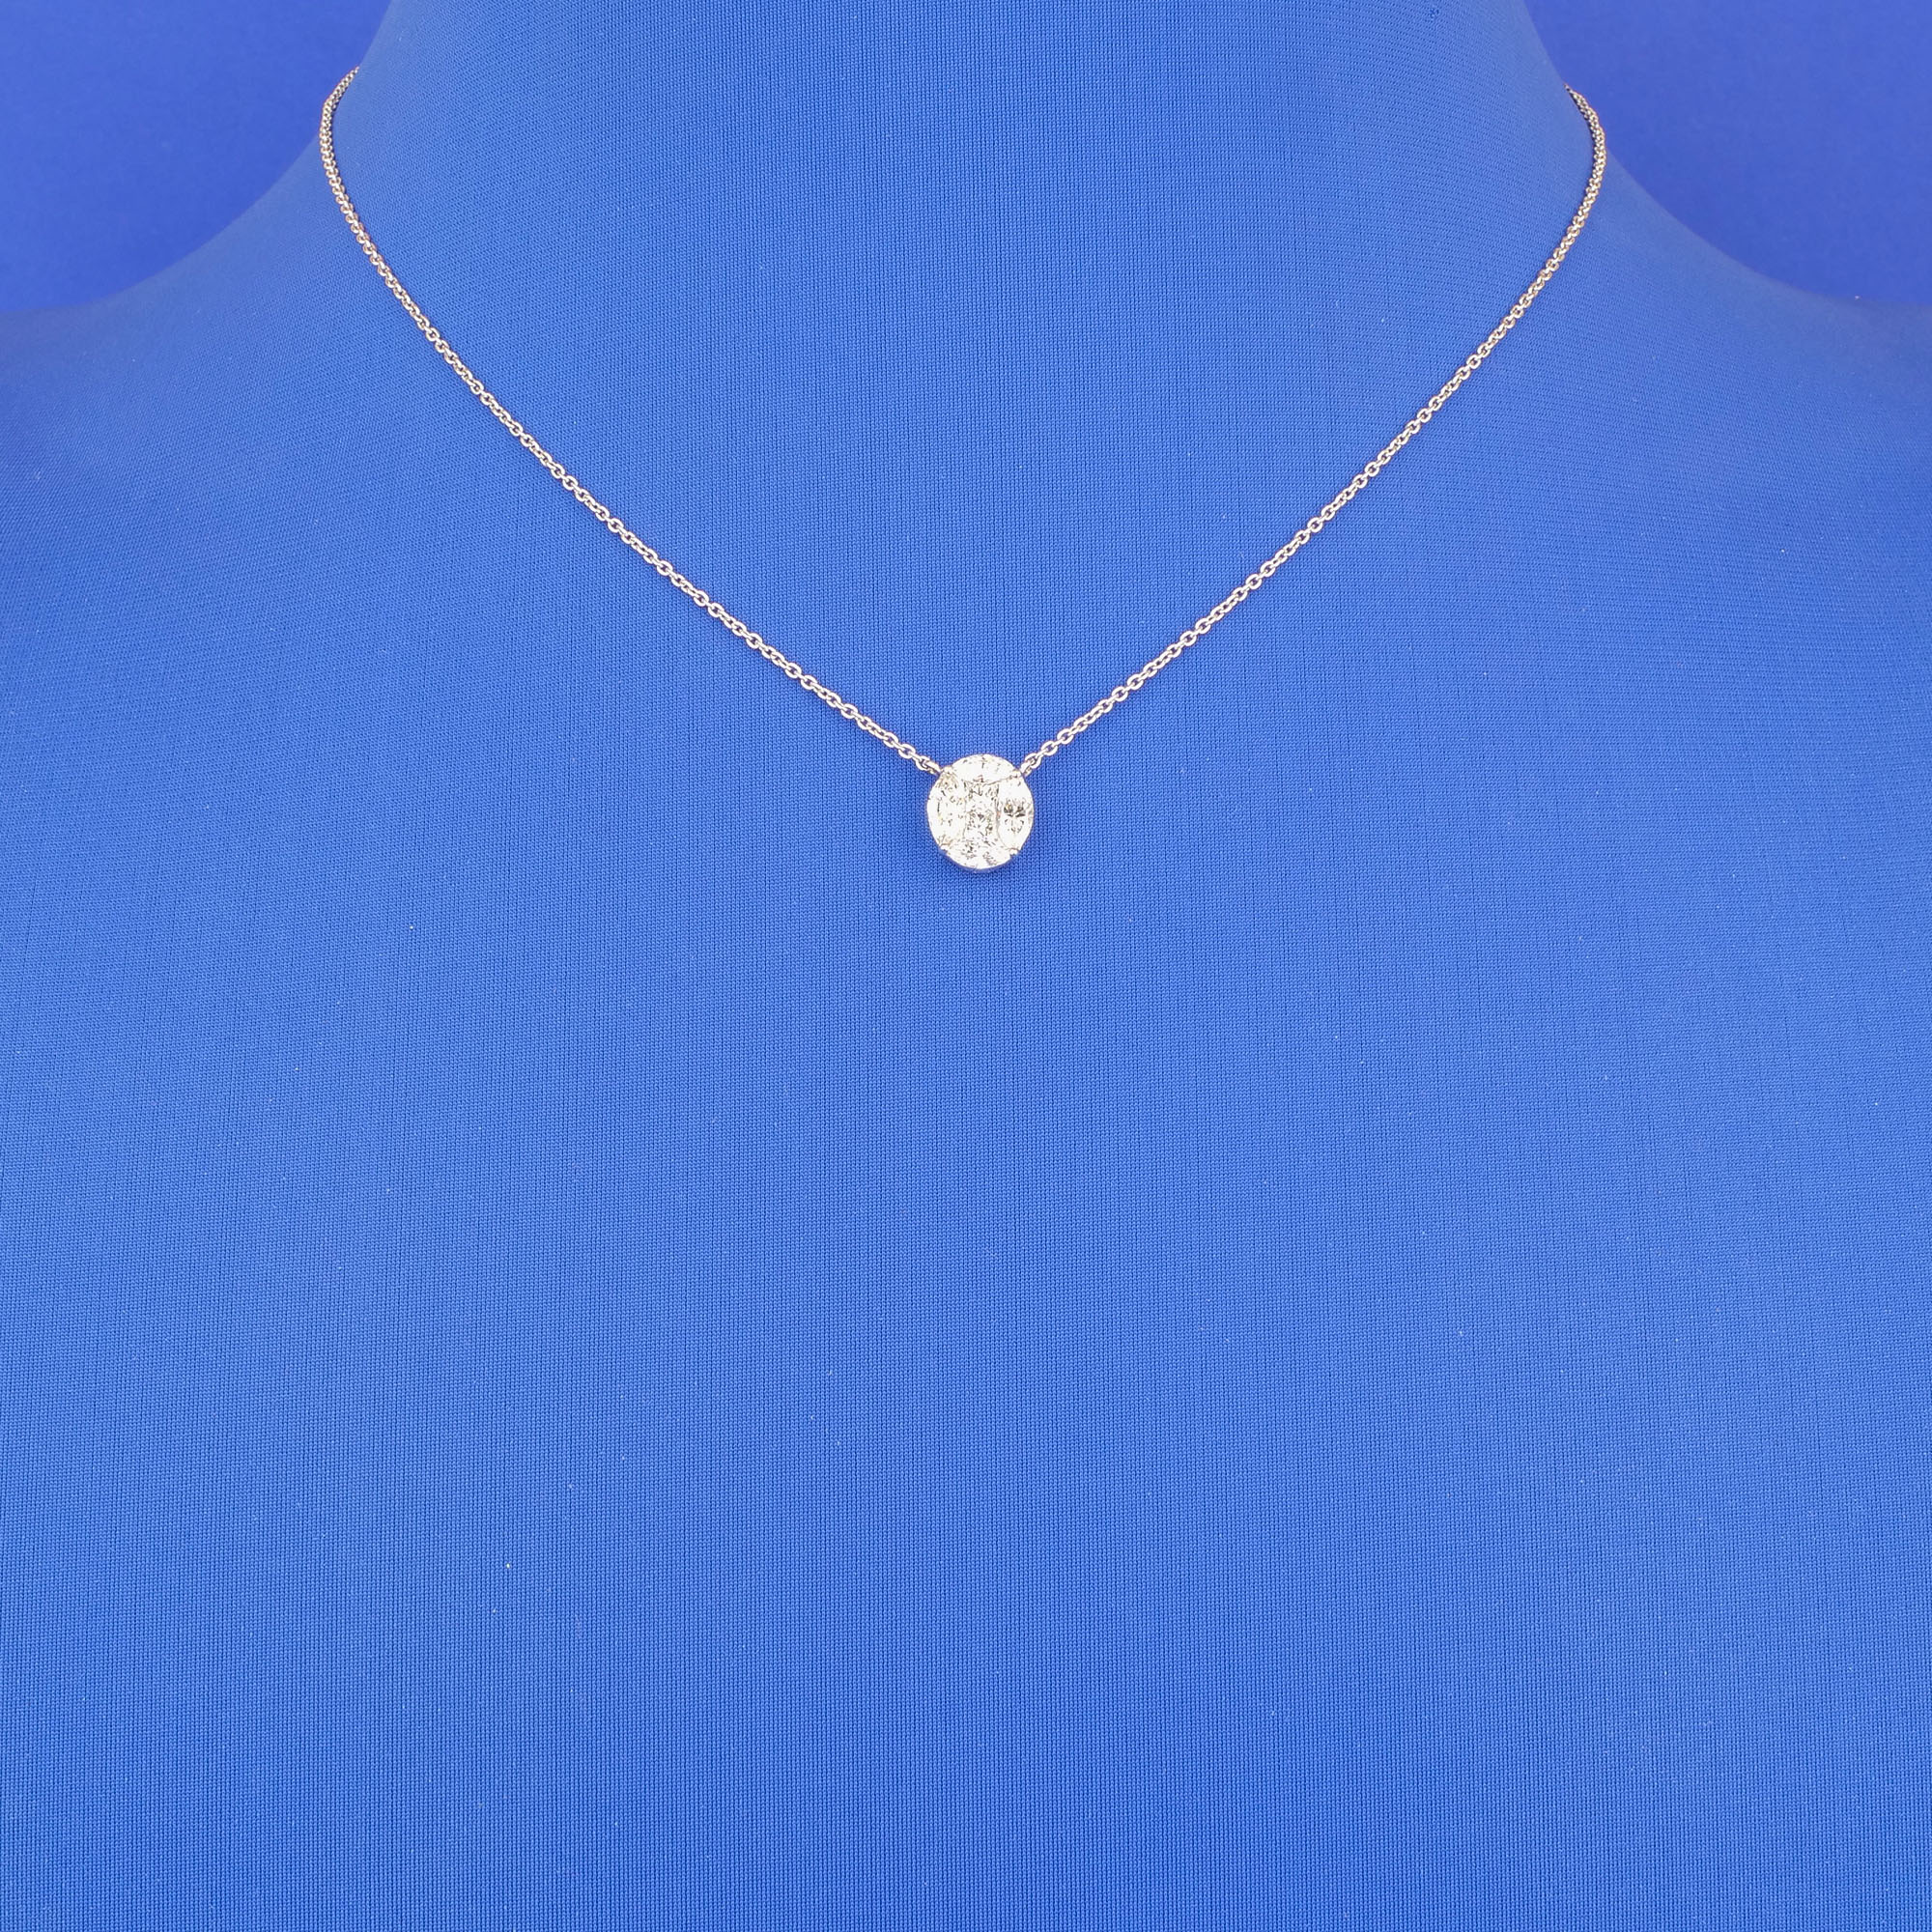 18K WG Diamond Necklace